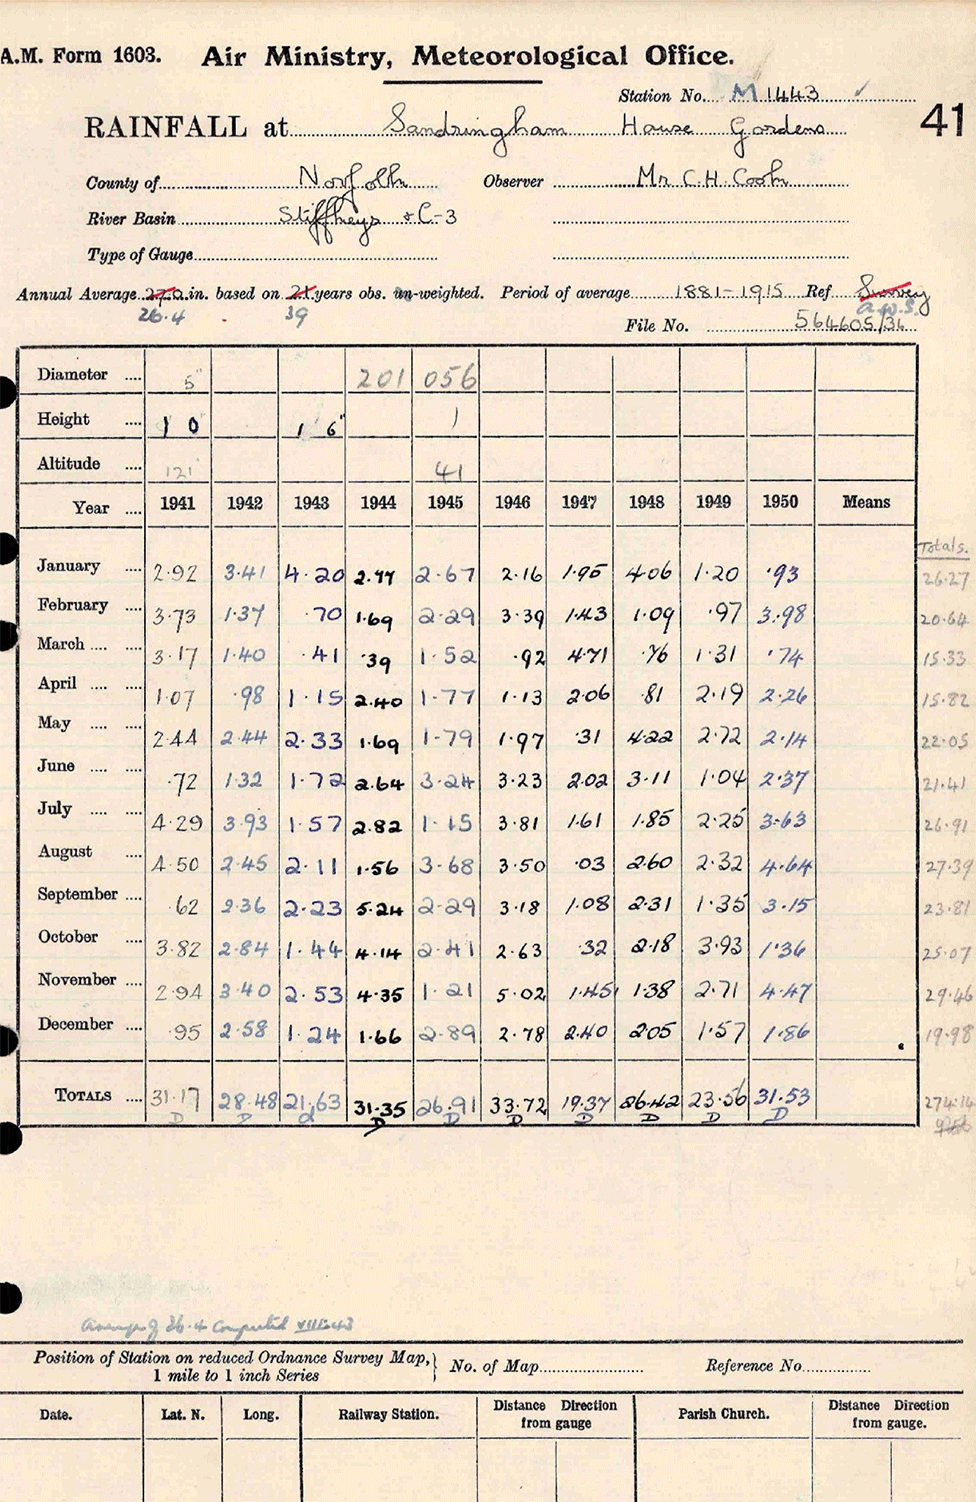 The rain gauge data for Sandringham House during the WWII